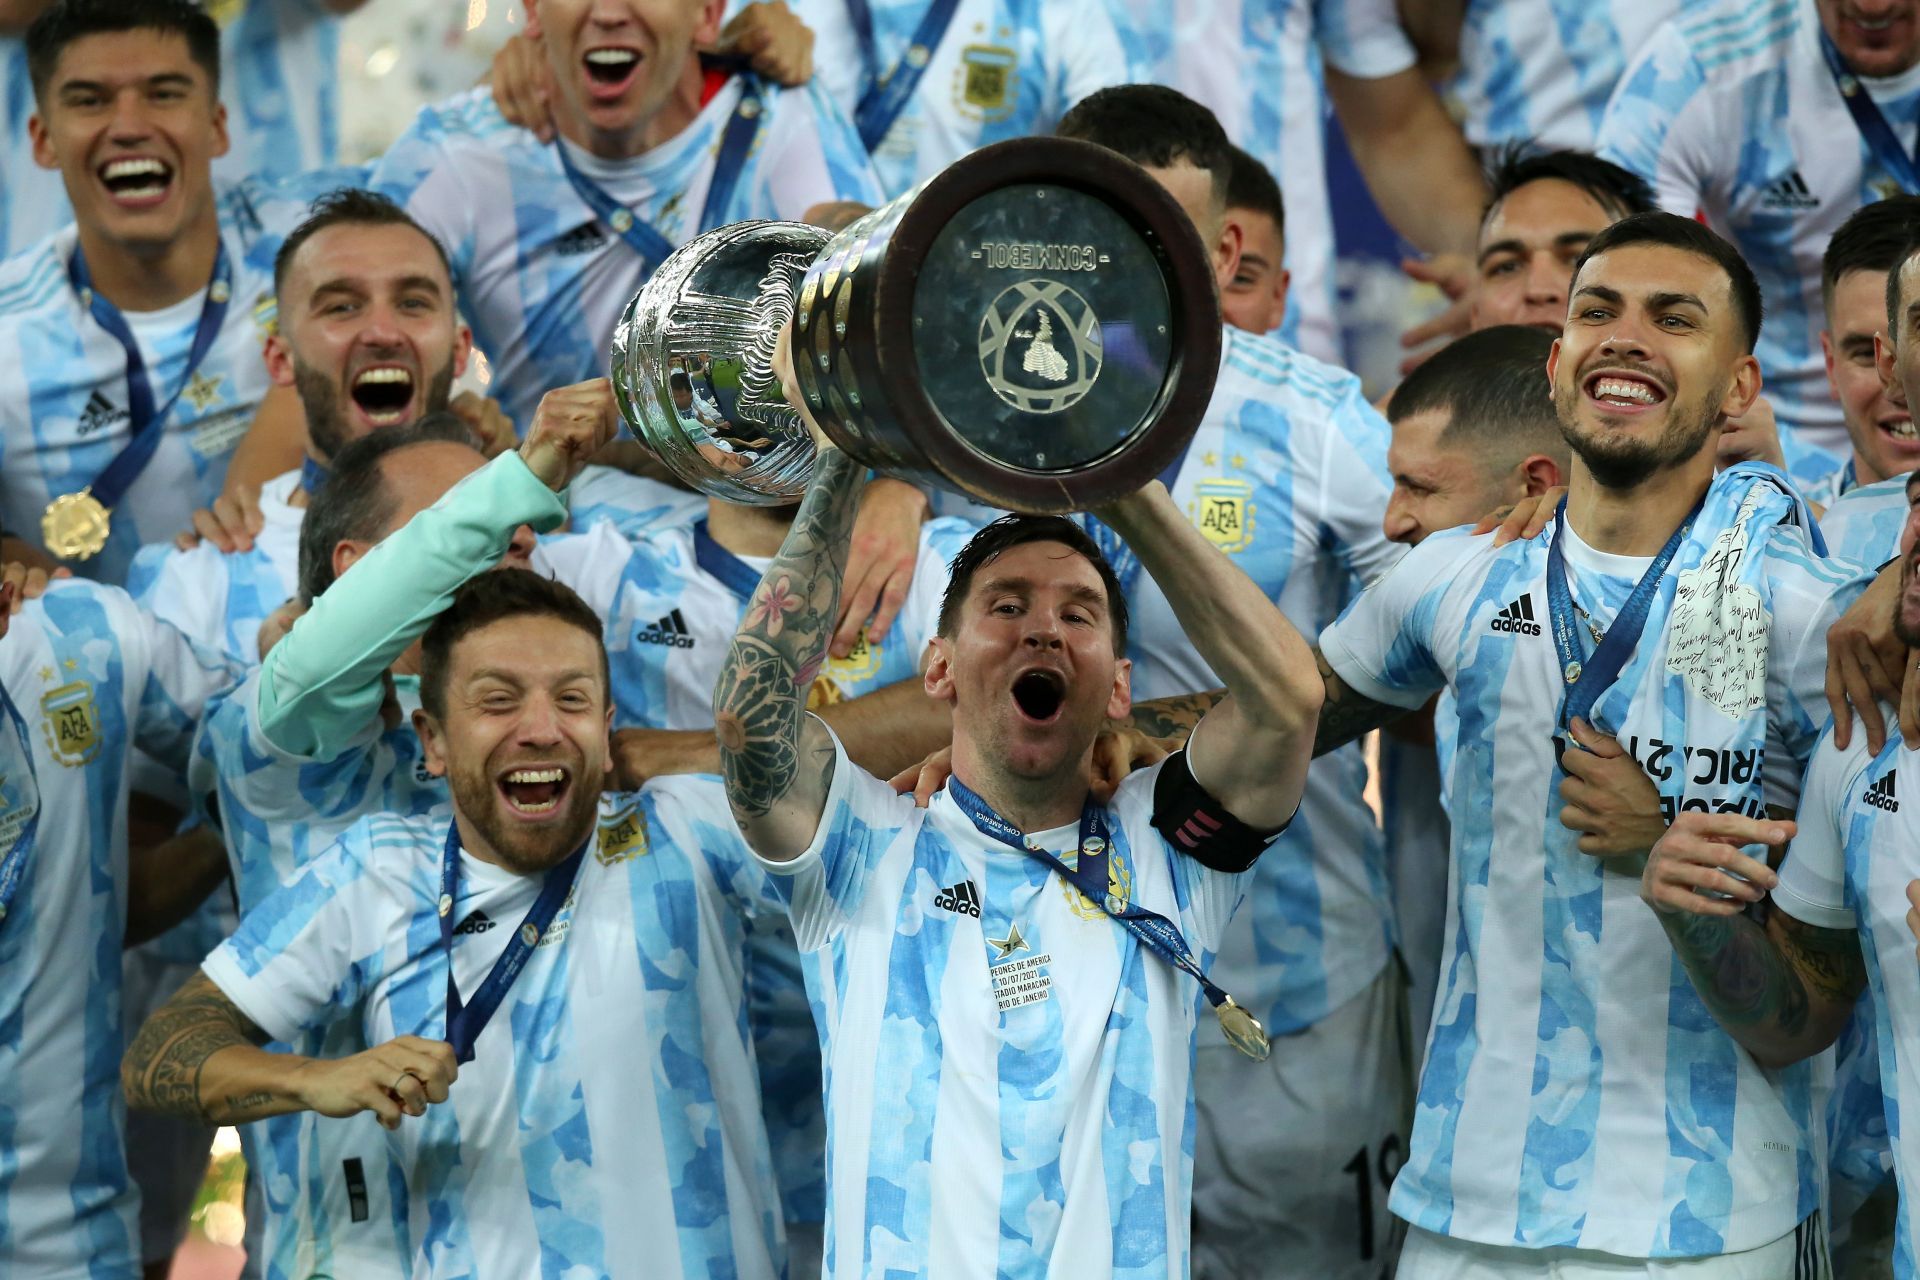 Lionel Messi won his first major international trophy